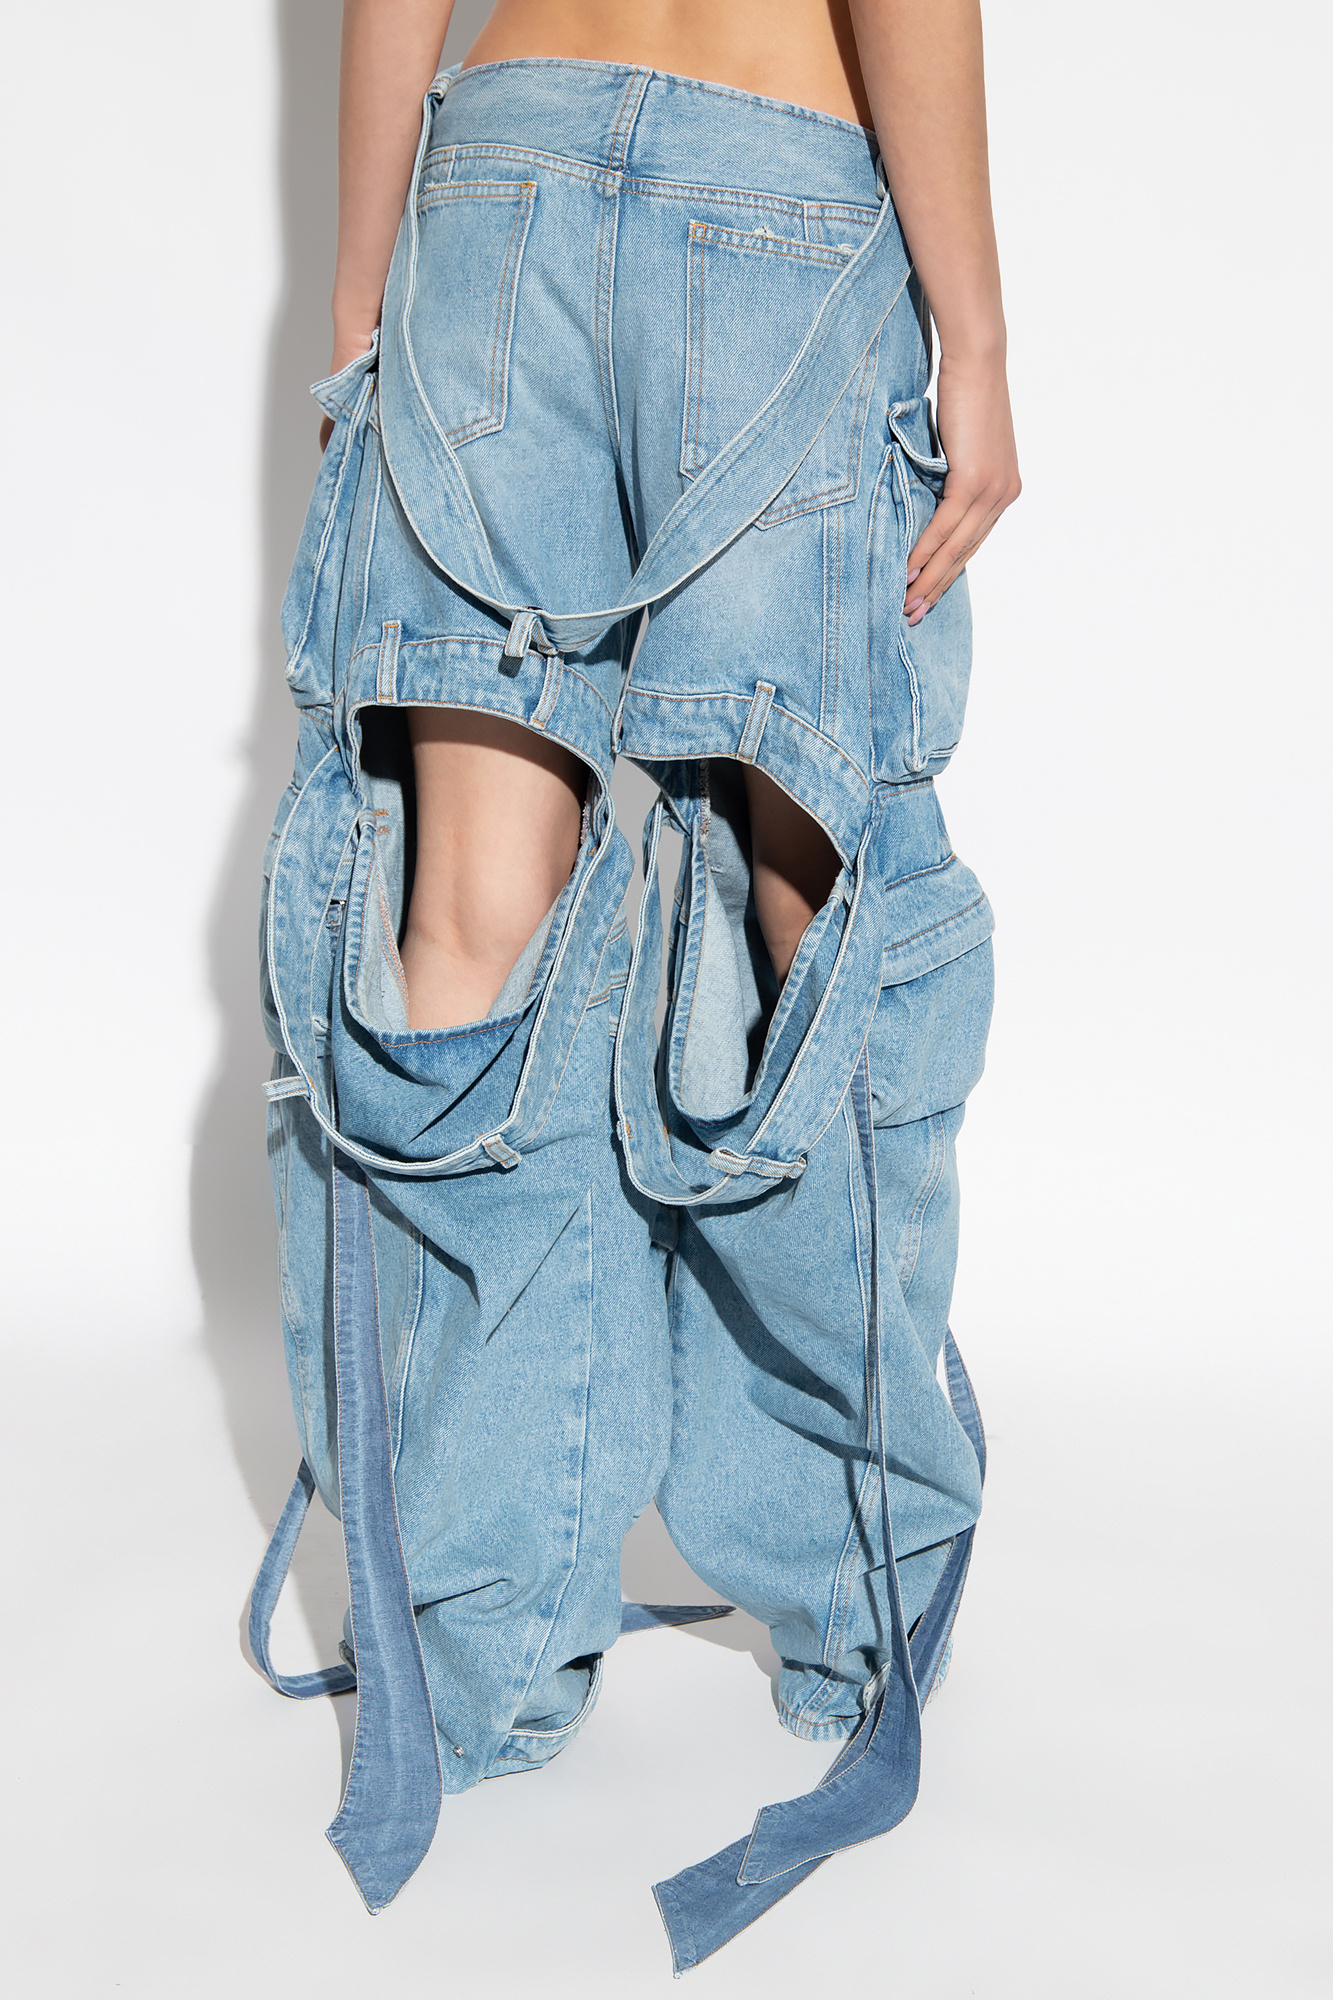 Buy DKNY Jeans women skinny fit dark wash non stretchable denim